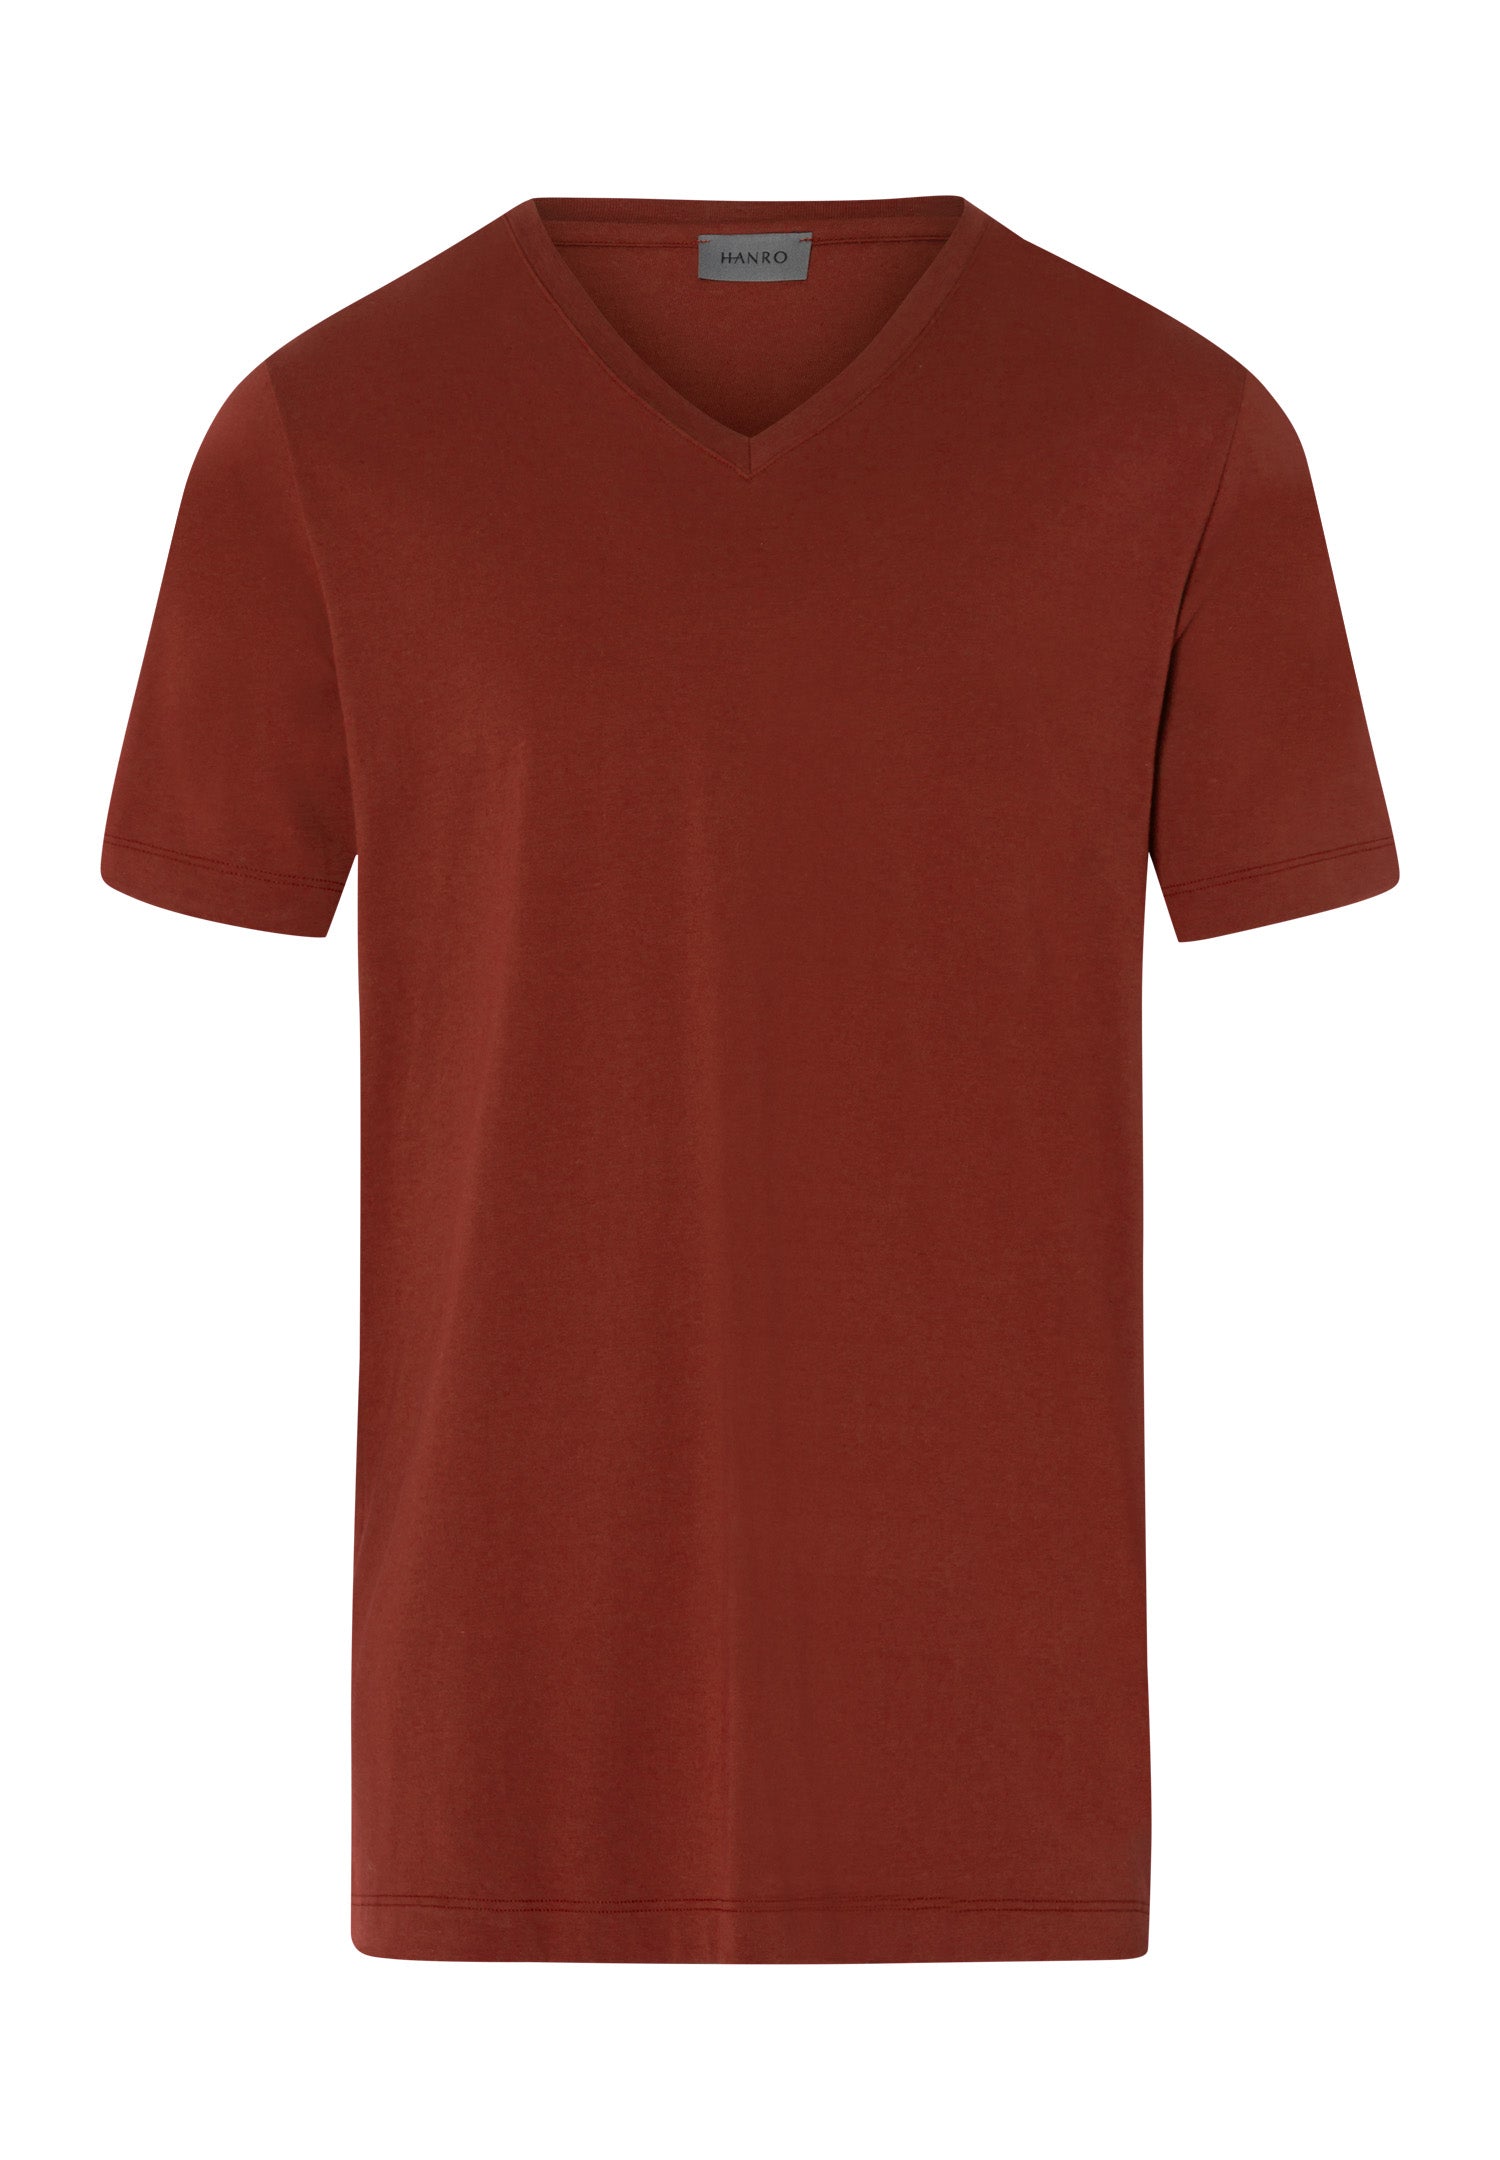 75051 Living Shirts Short Sleeve V-Neck Shirt - 2750 Russet Brown